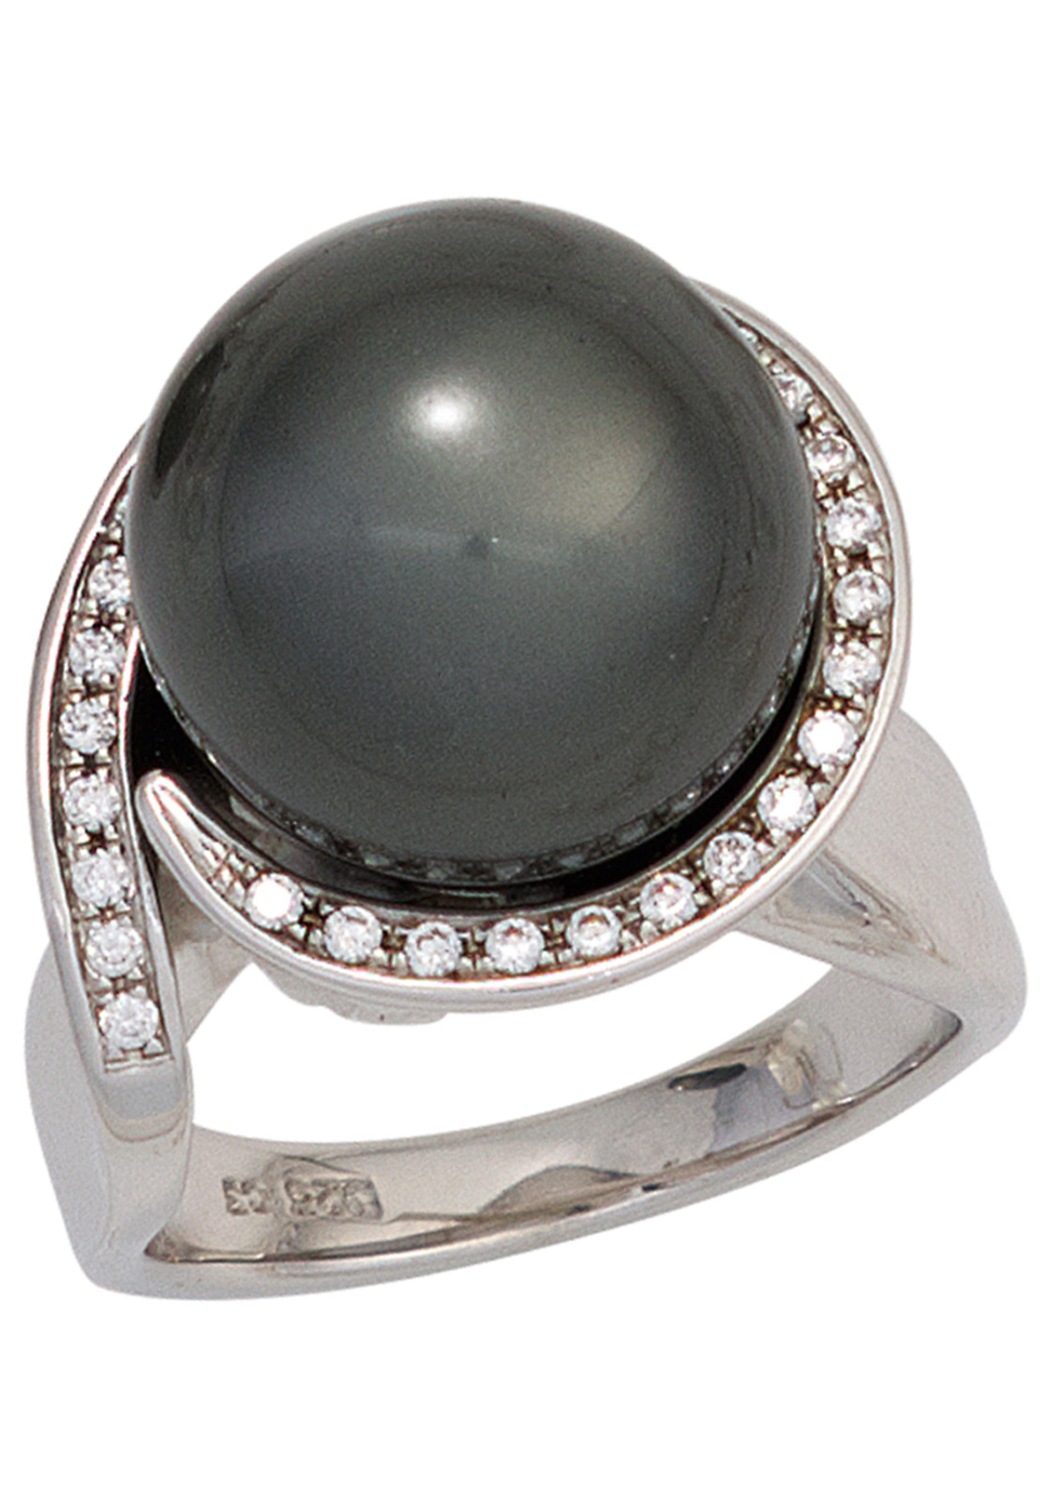 JOBO Perlenring 925 Silber mit synthetischer Perle und Zirkonia